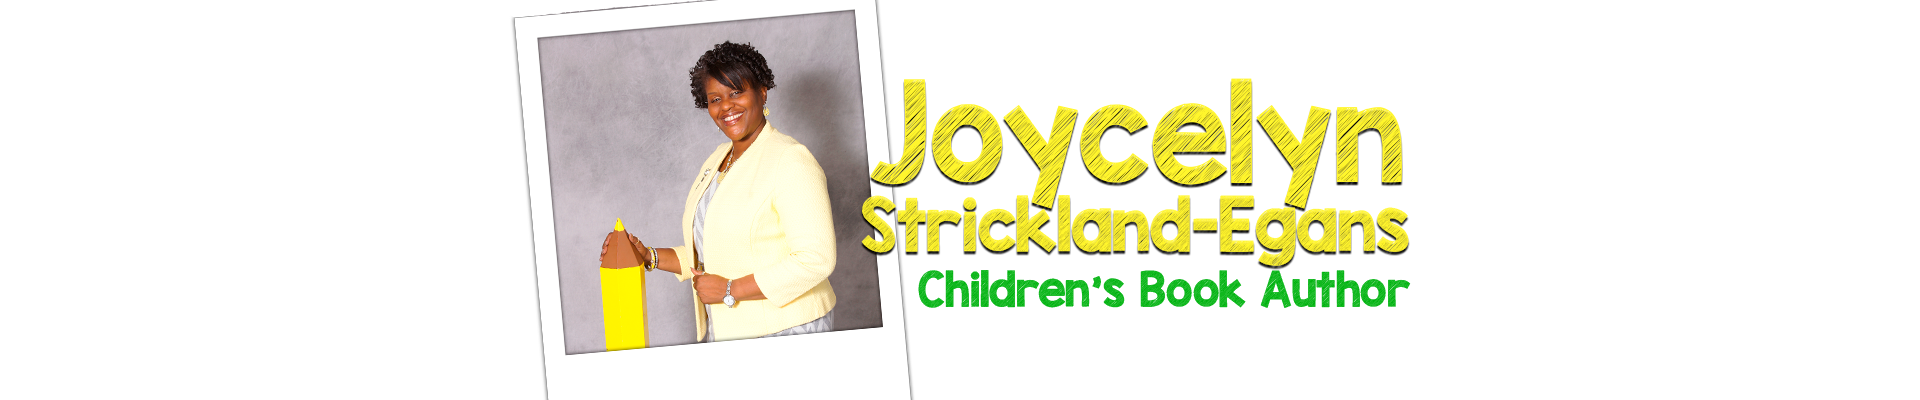 Joycelyn Strickland-Egans